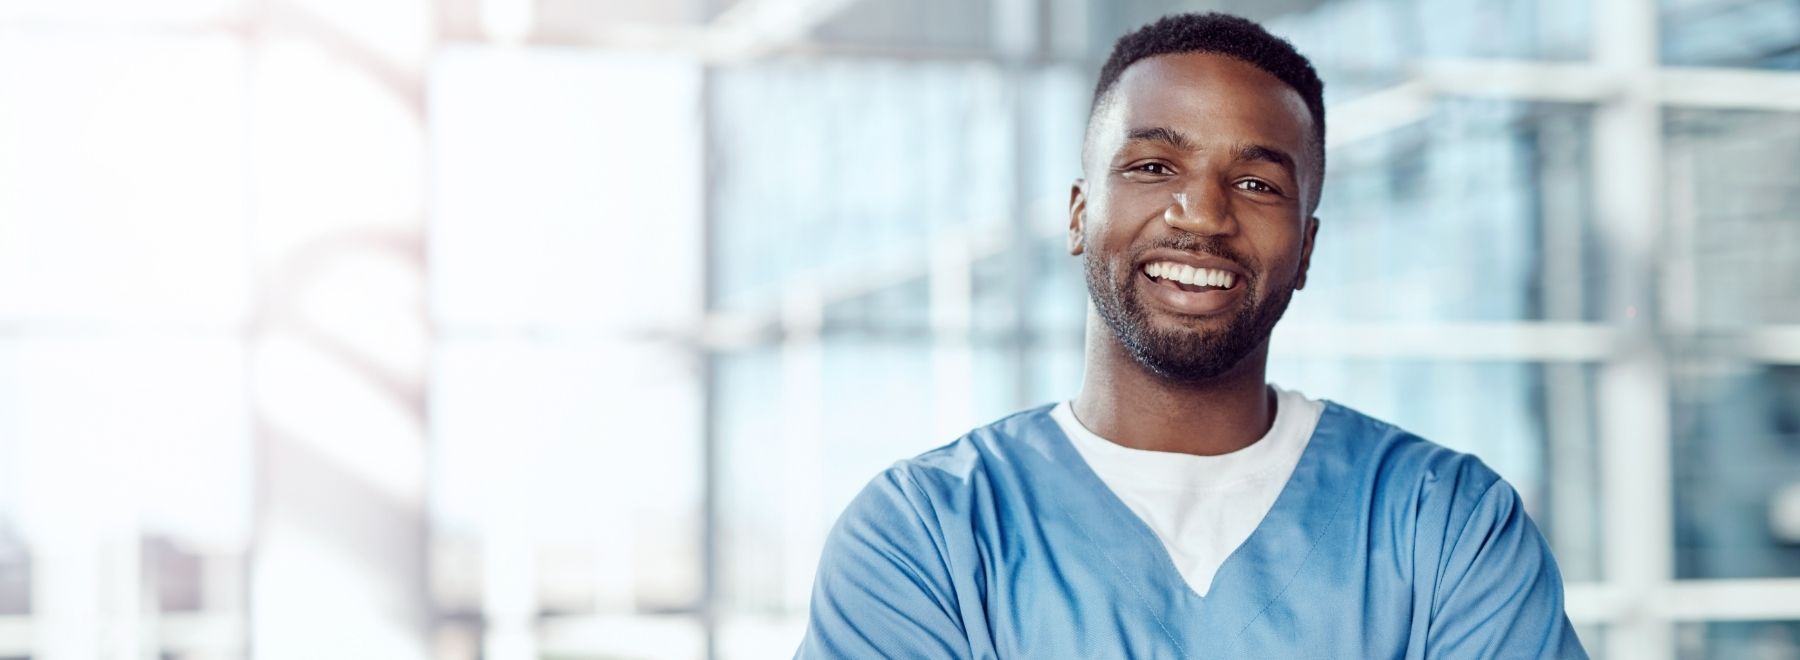 A smiling male nurse